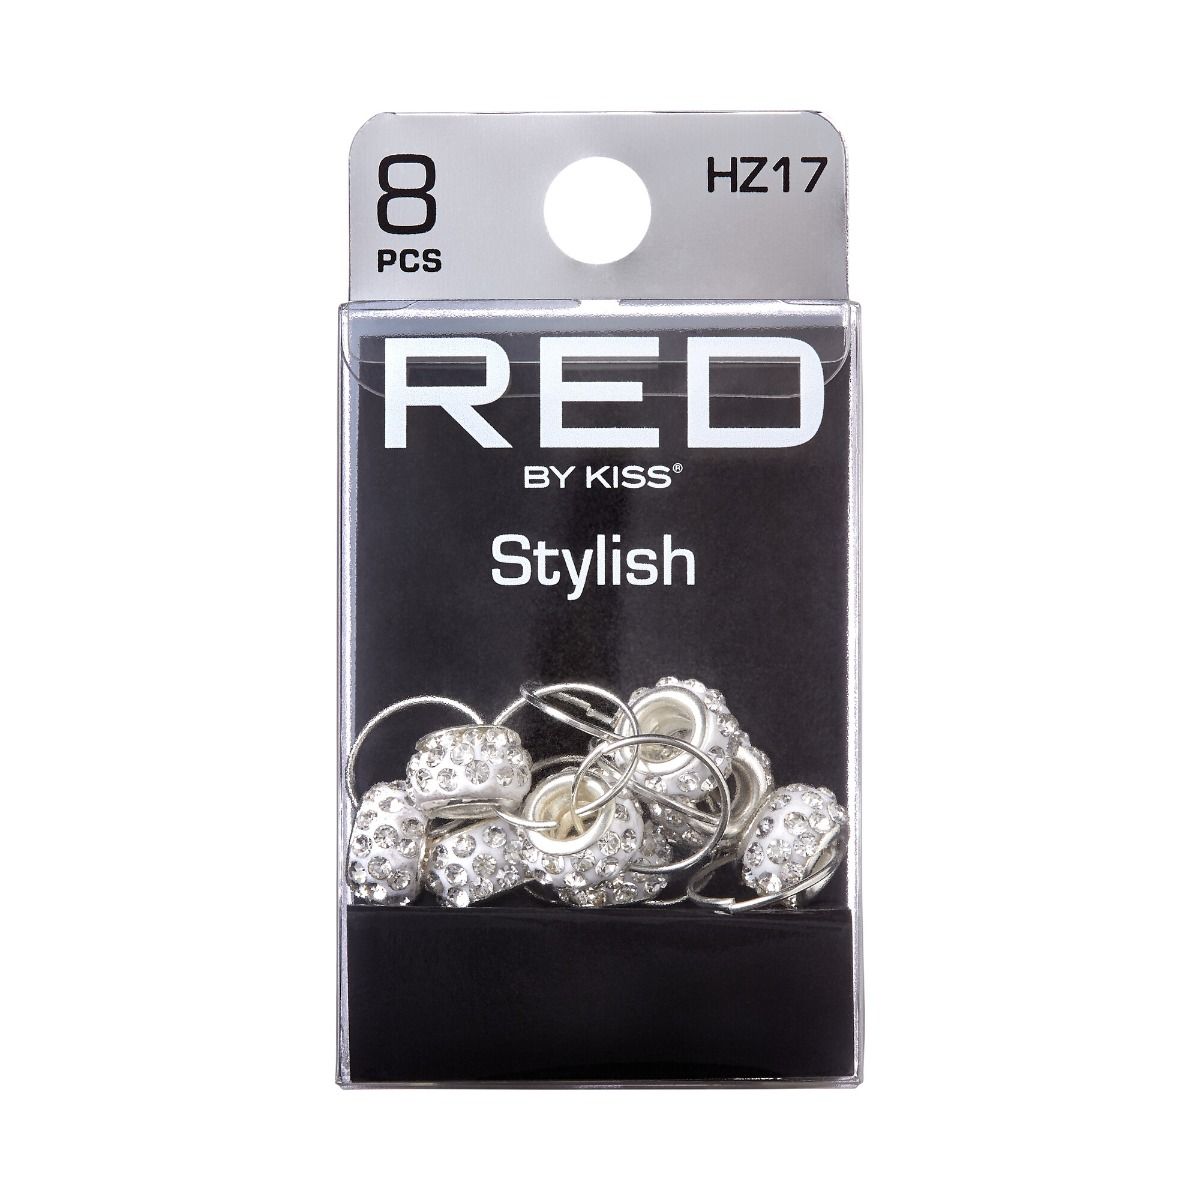 Red by Kiss 8pcs Stylish Braid Charm #HZ17